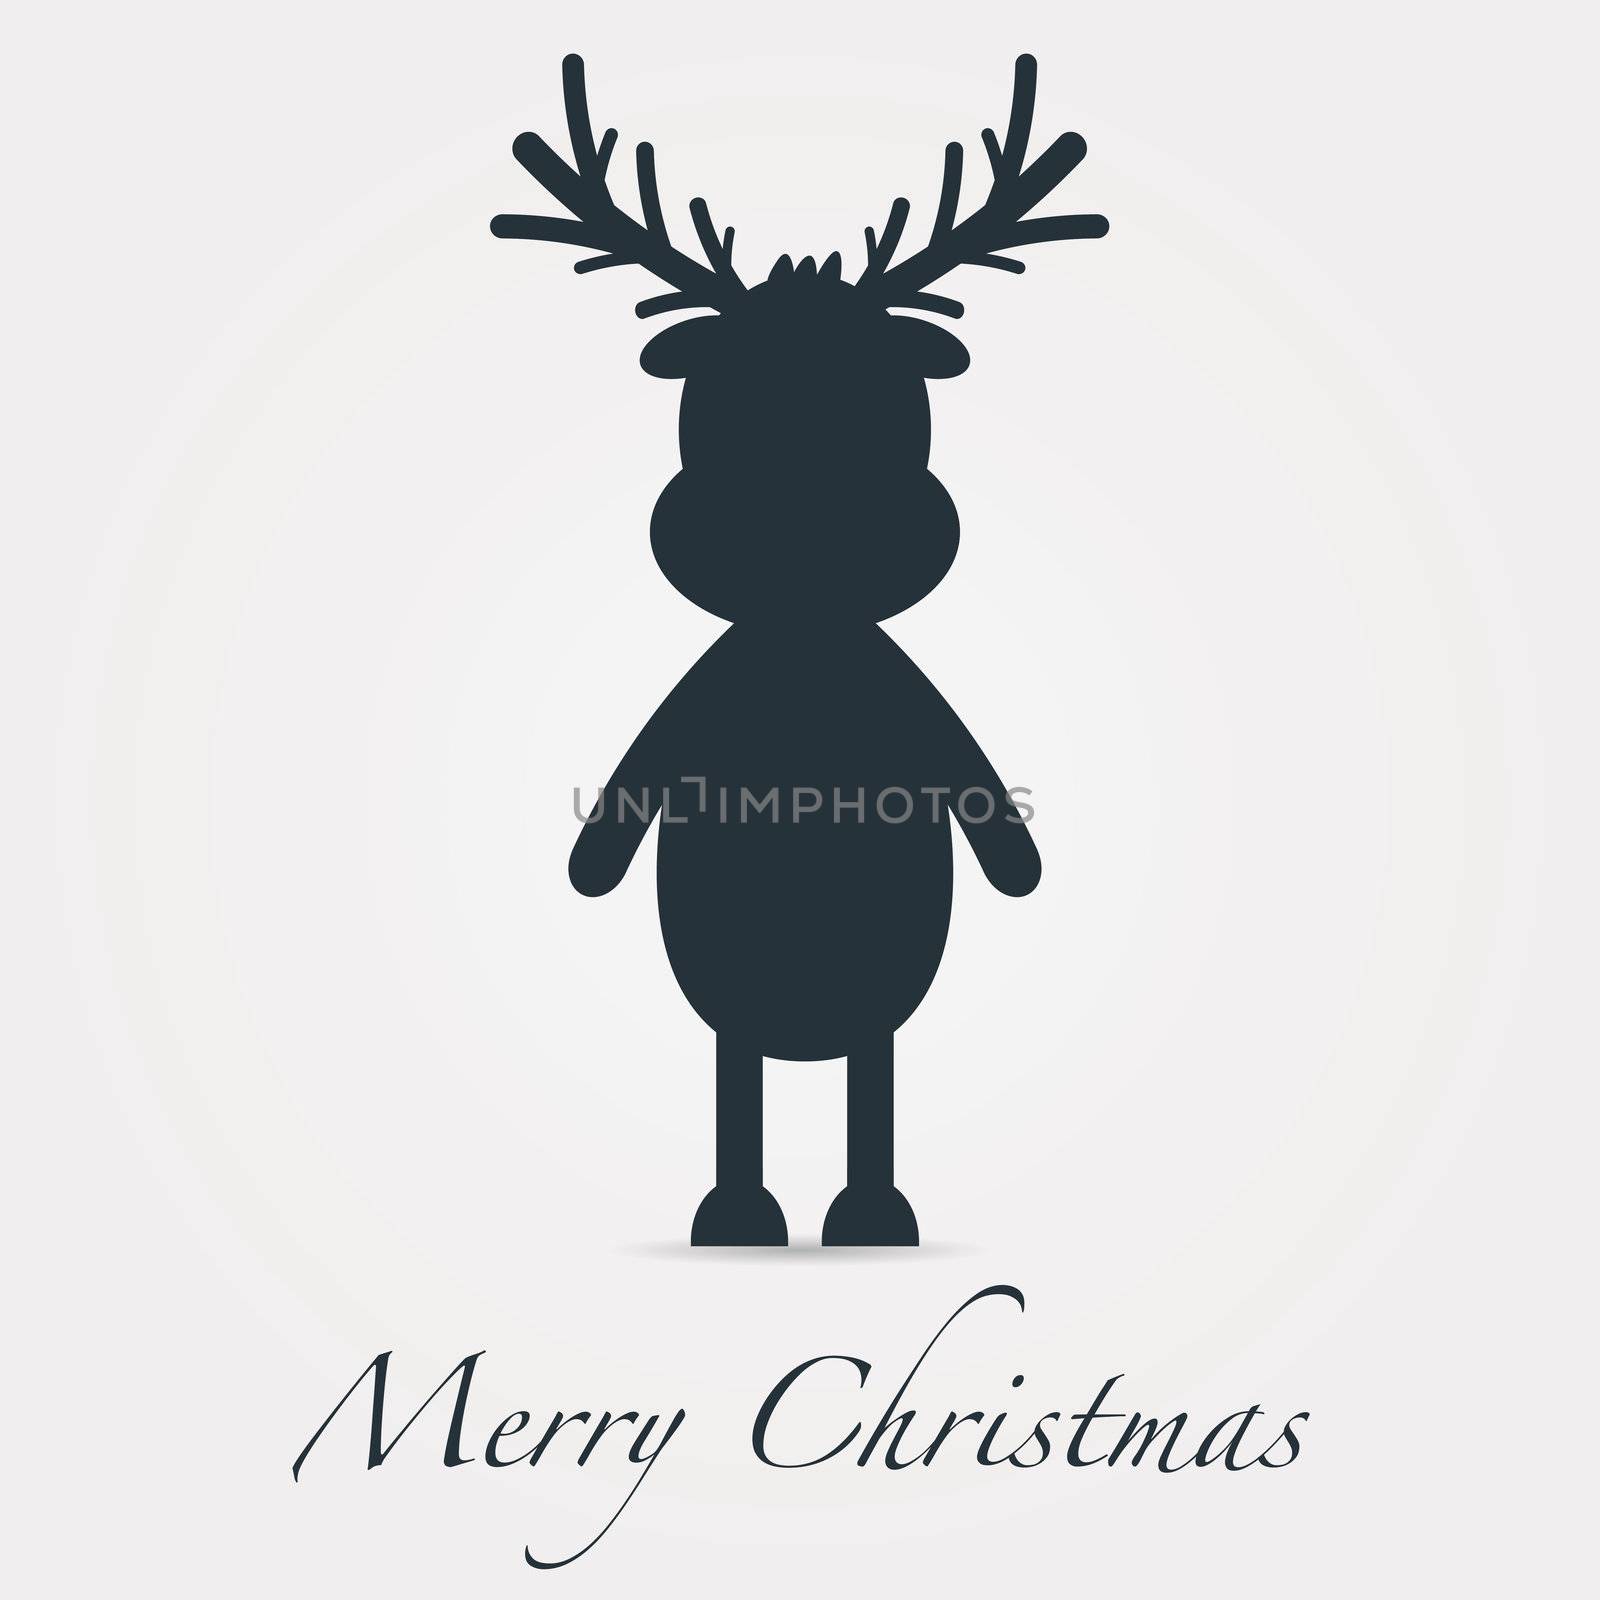 rudolph reindeer silhouette black merry christmas text